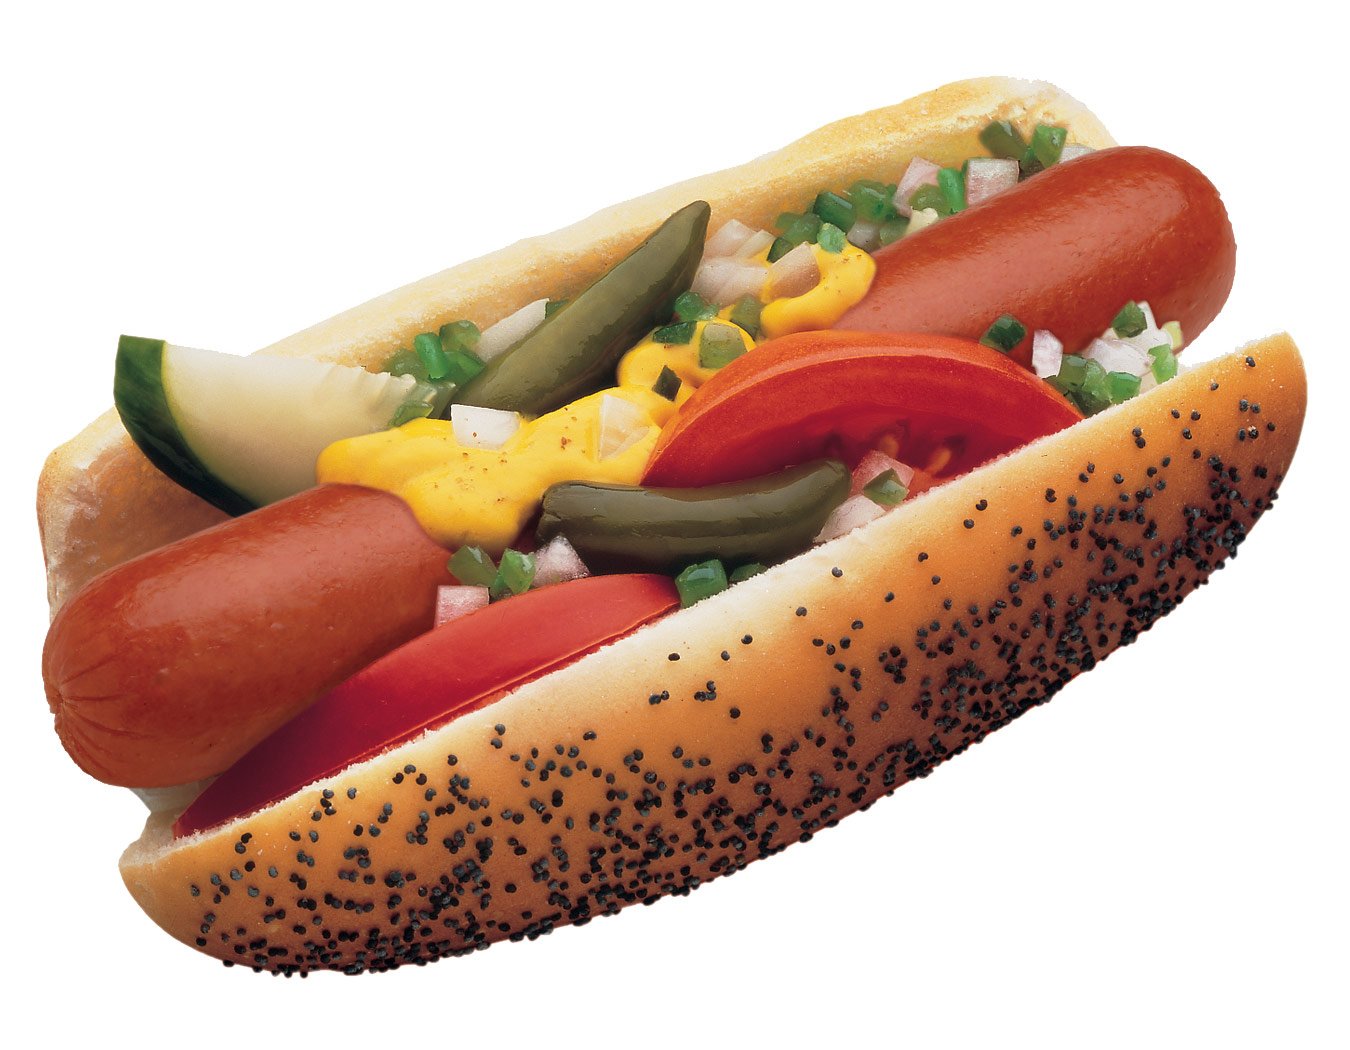 chicago hot dog